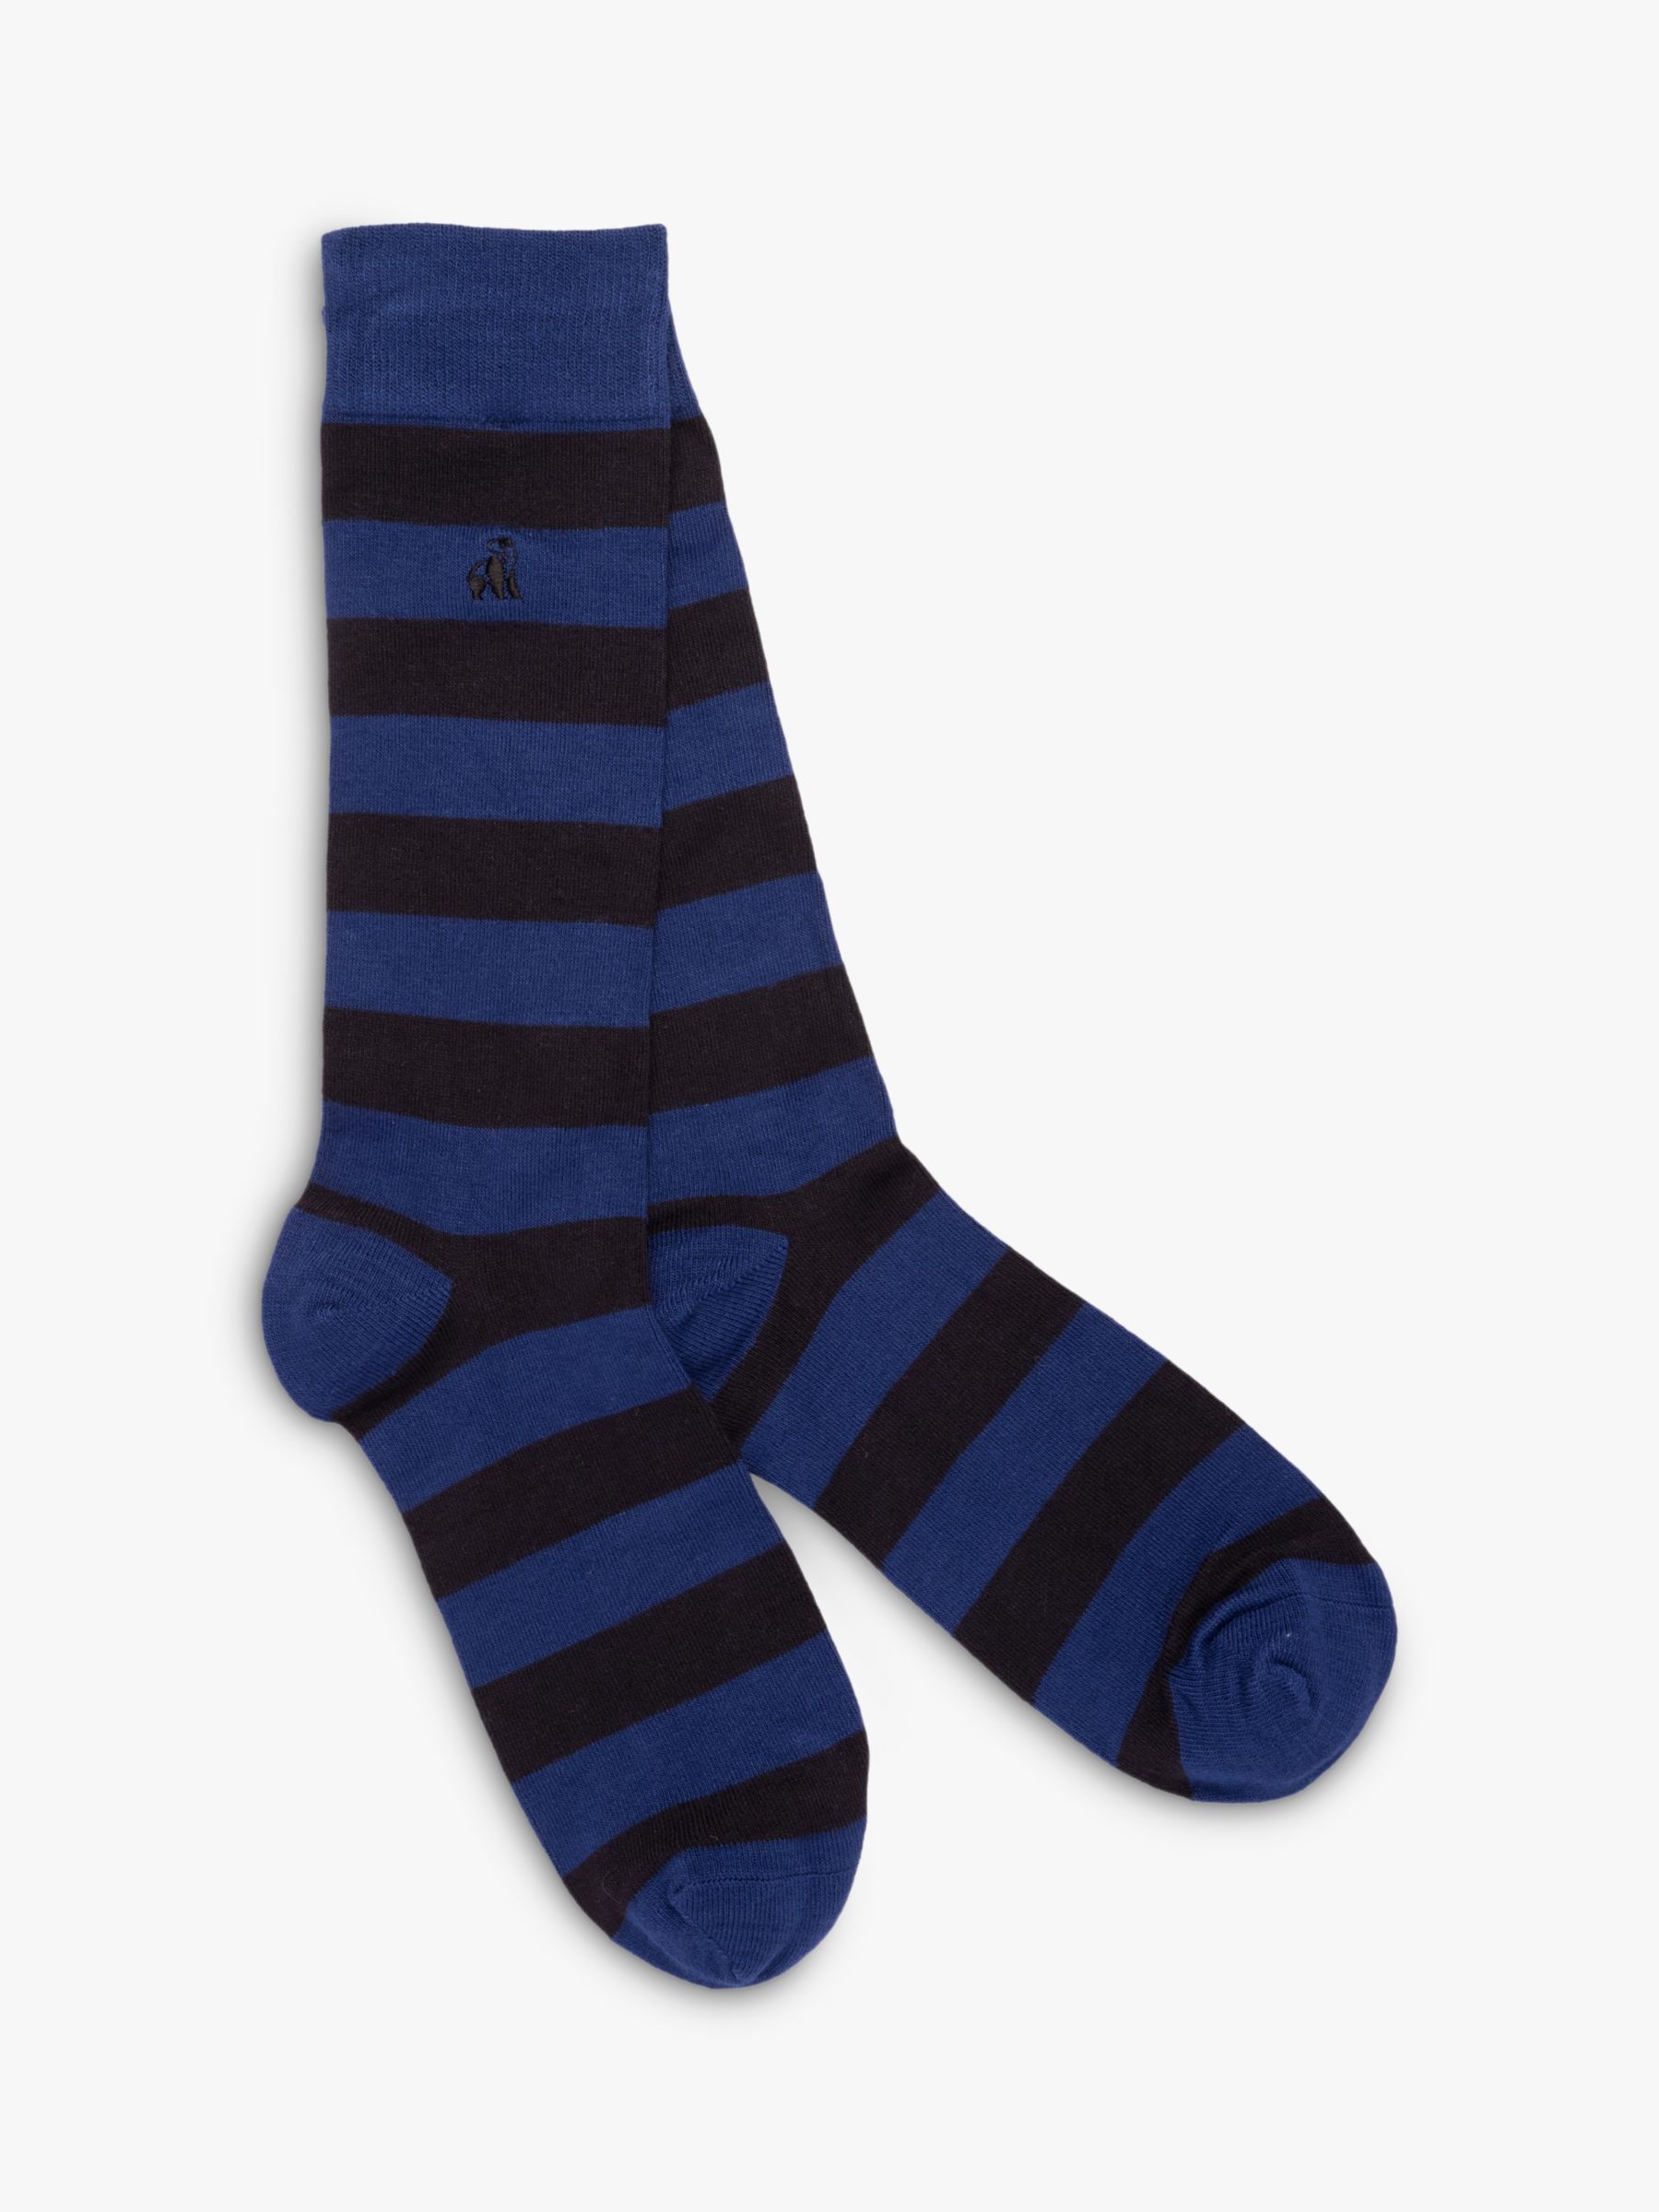 Swole Panda Spots & Stripes Comfort Cuff Bamboo Socks, Pack of 4, Multi, 7-11